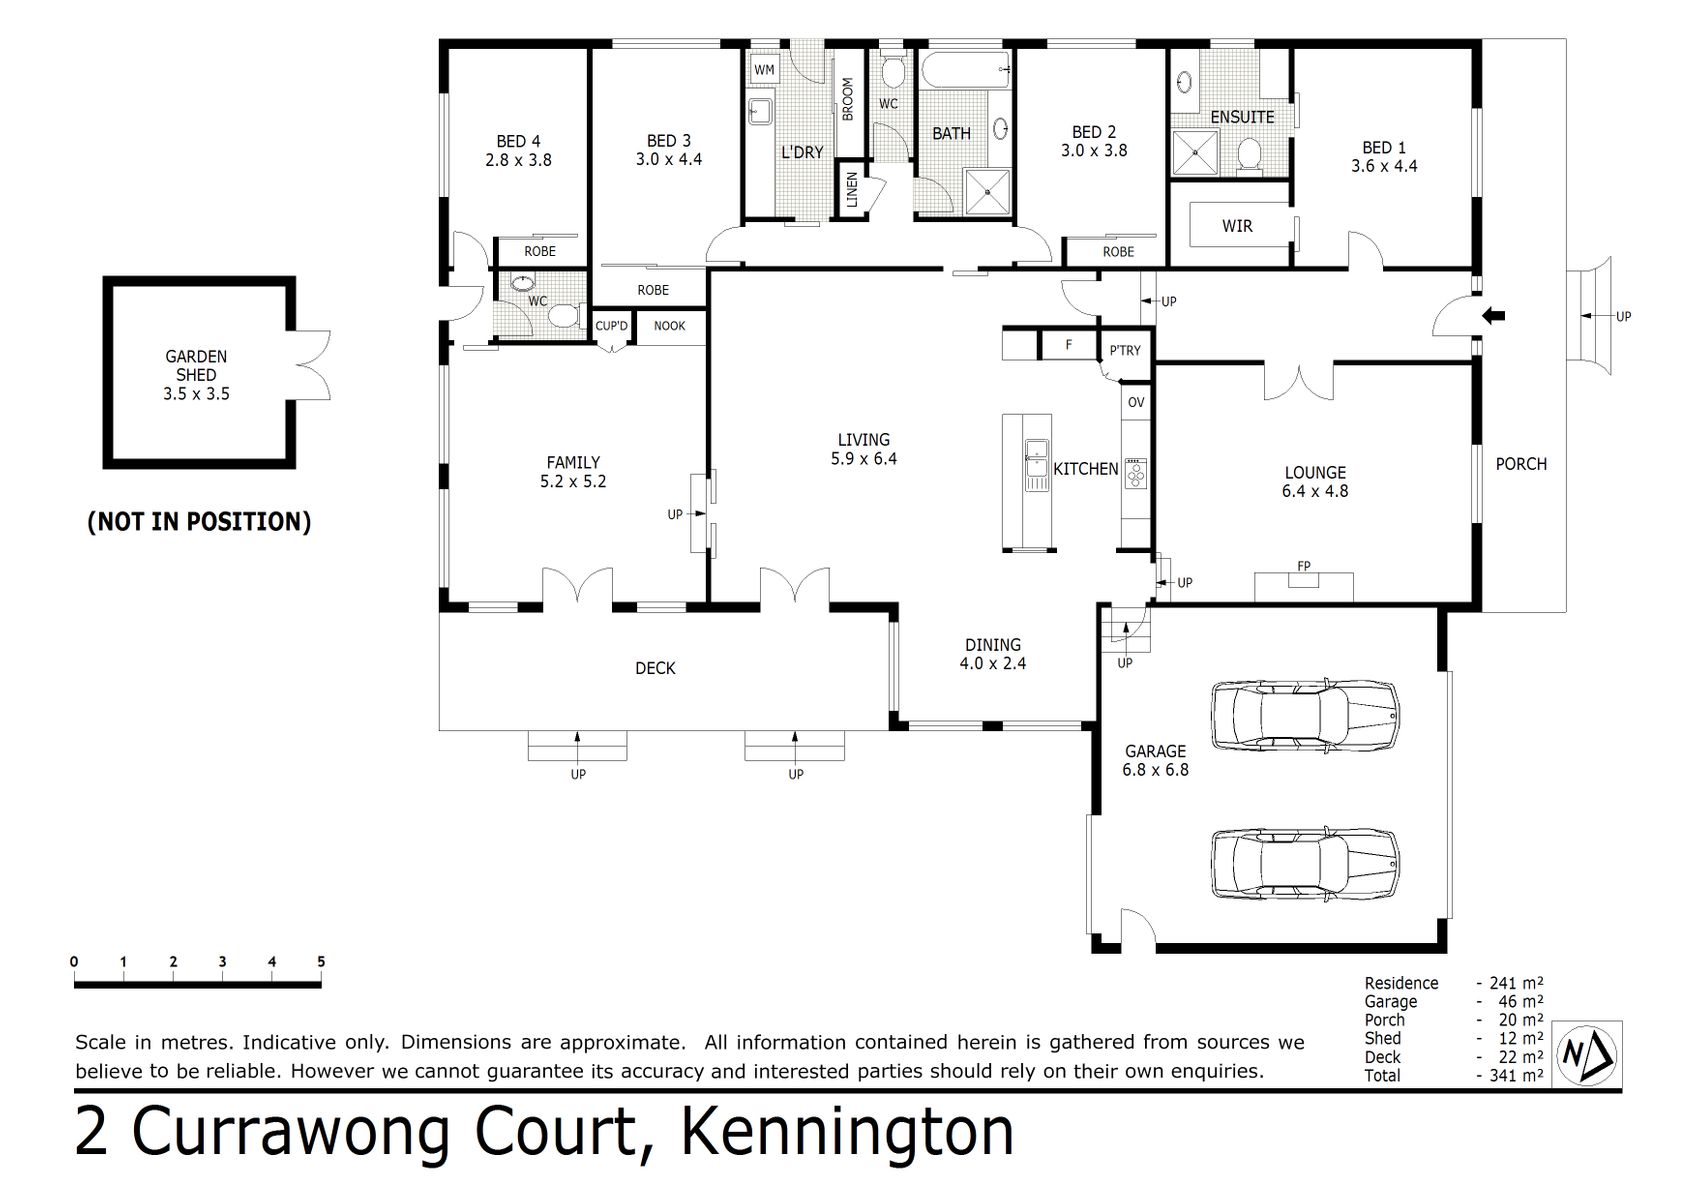 2 Currawong Court Kennington (14 SEP 2020) 287sqm